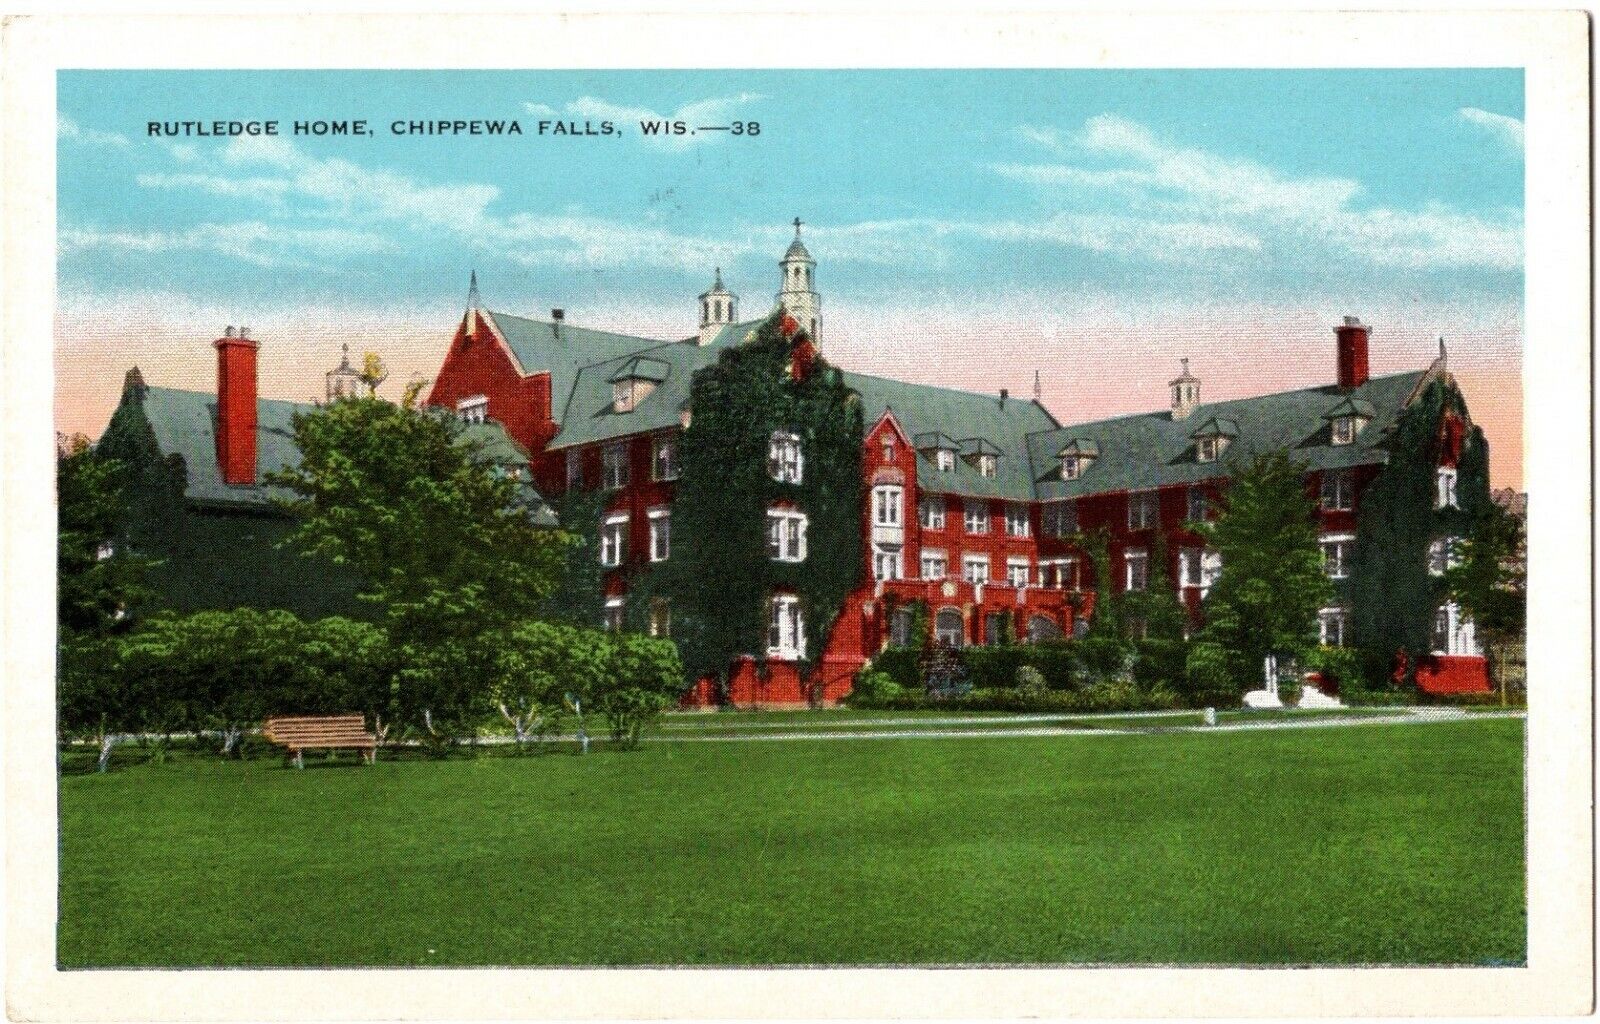 Rutledge Home, Chippewa Falls, Wisconsin - Vintage Postcard 